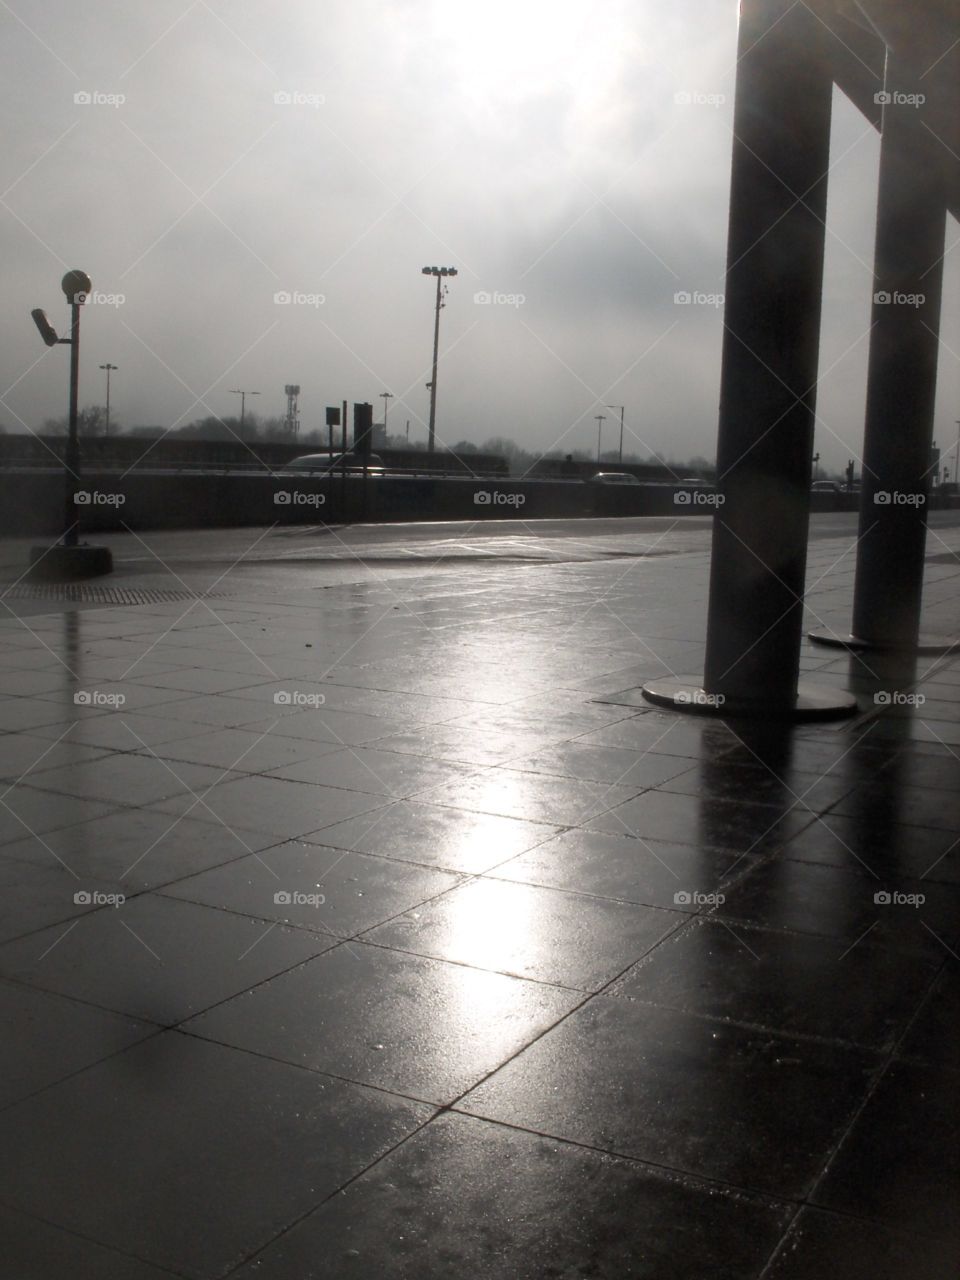 sun reflecting on wet pavement, rainy day